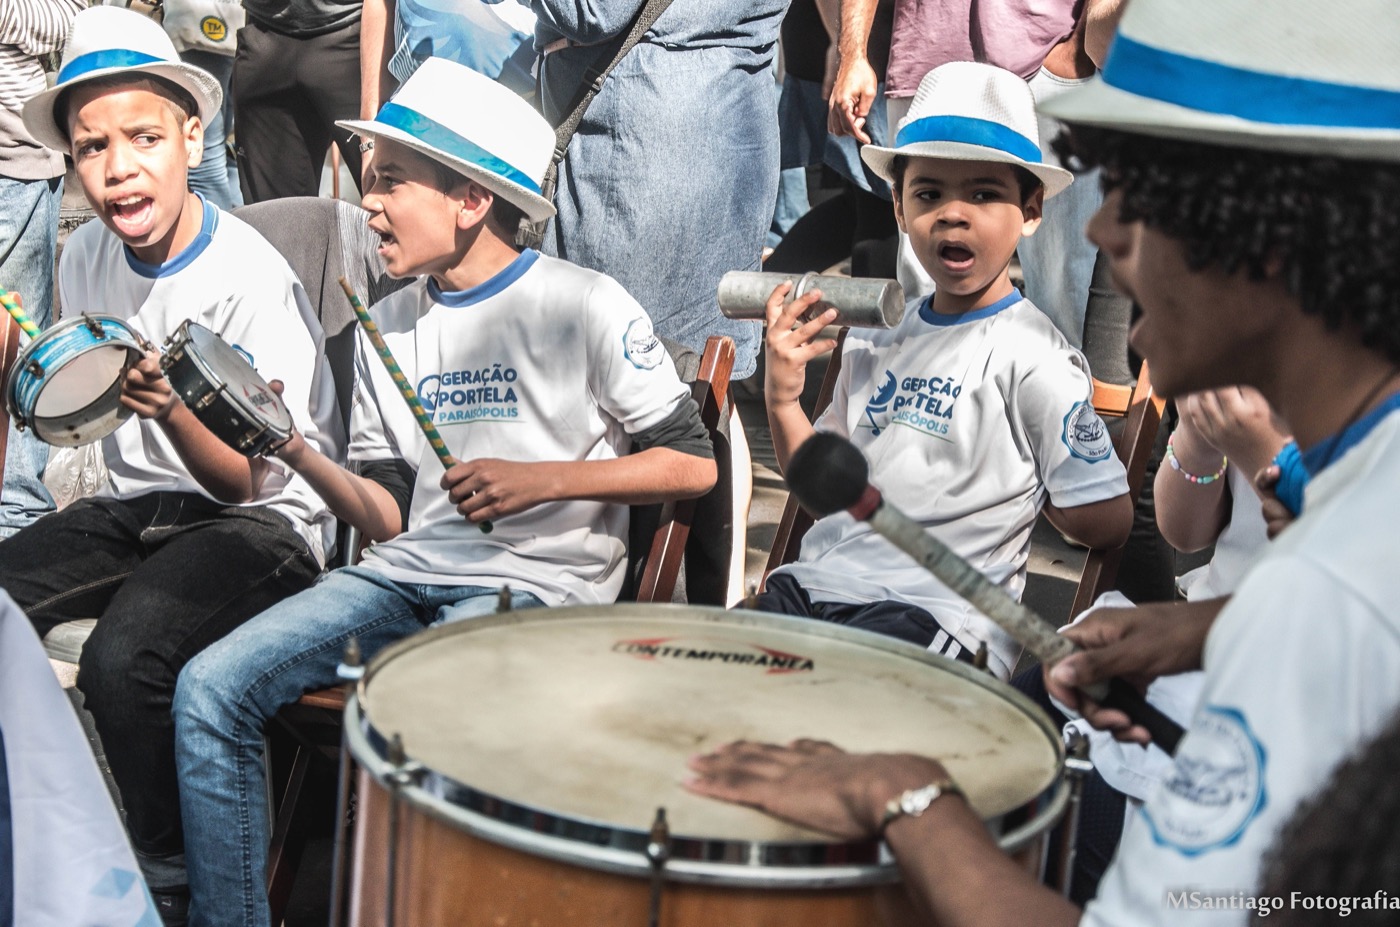 Escola de Samba: jogo educativo